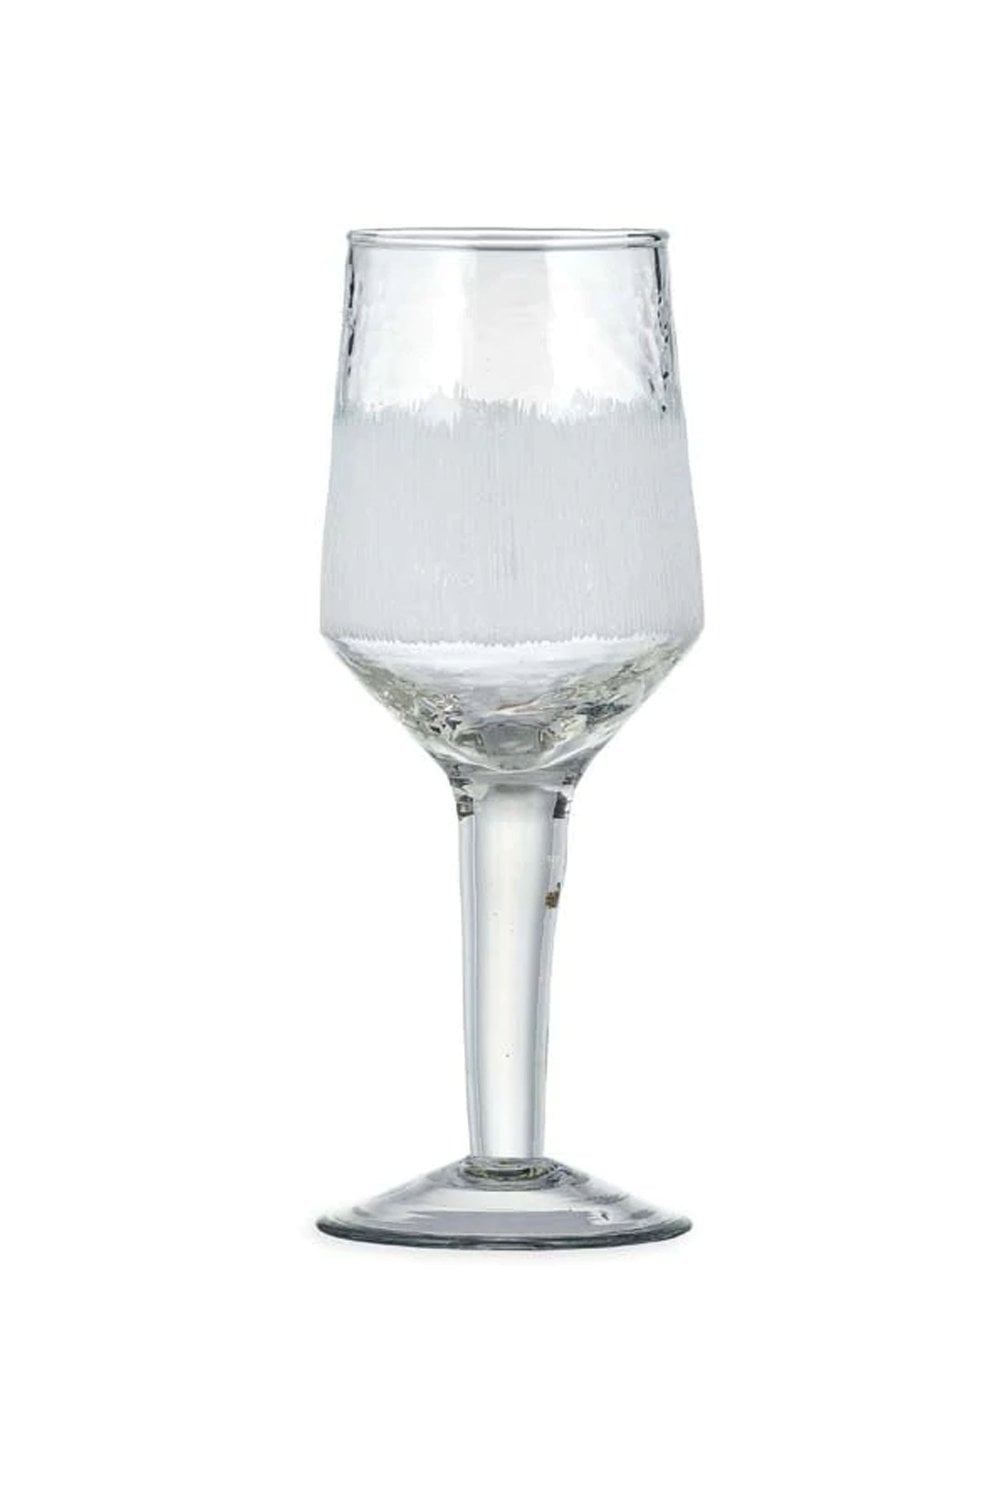 Nkuku Anara Etched Wine Glass Set Of 4